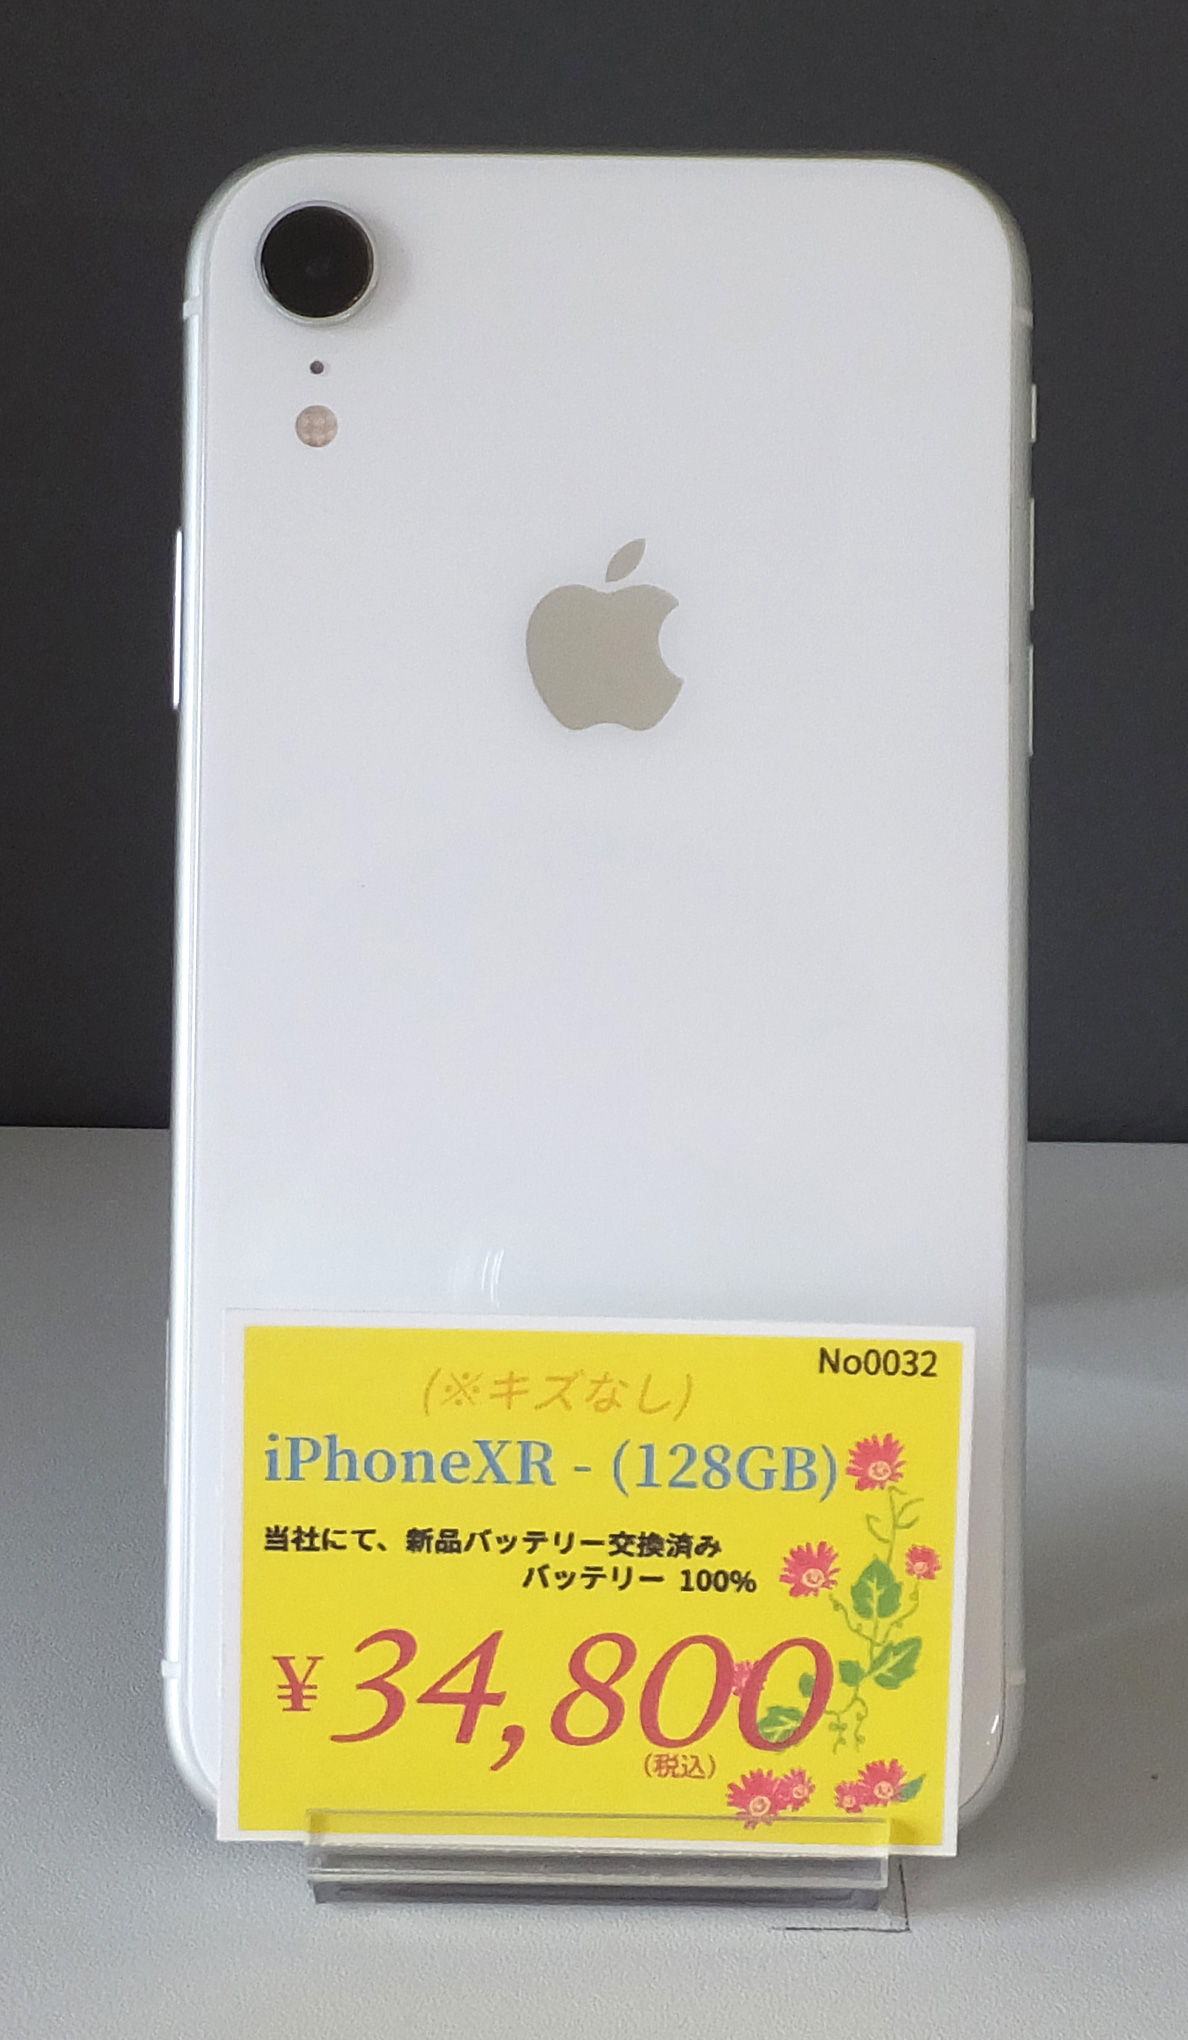 【SIMフリー】iPhoneXR 64GB バッテリー100%